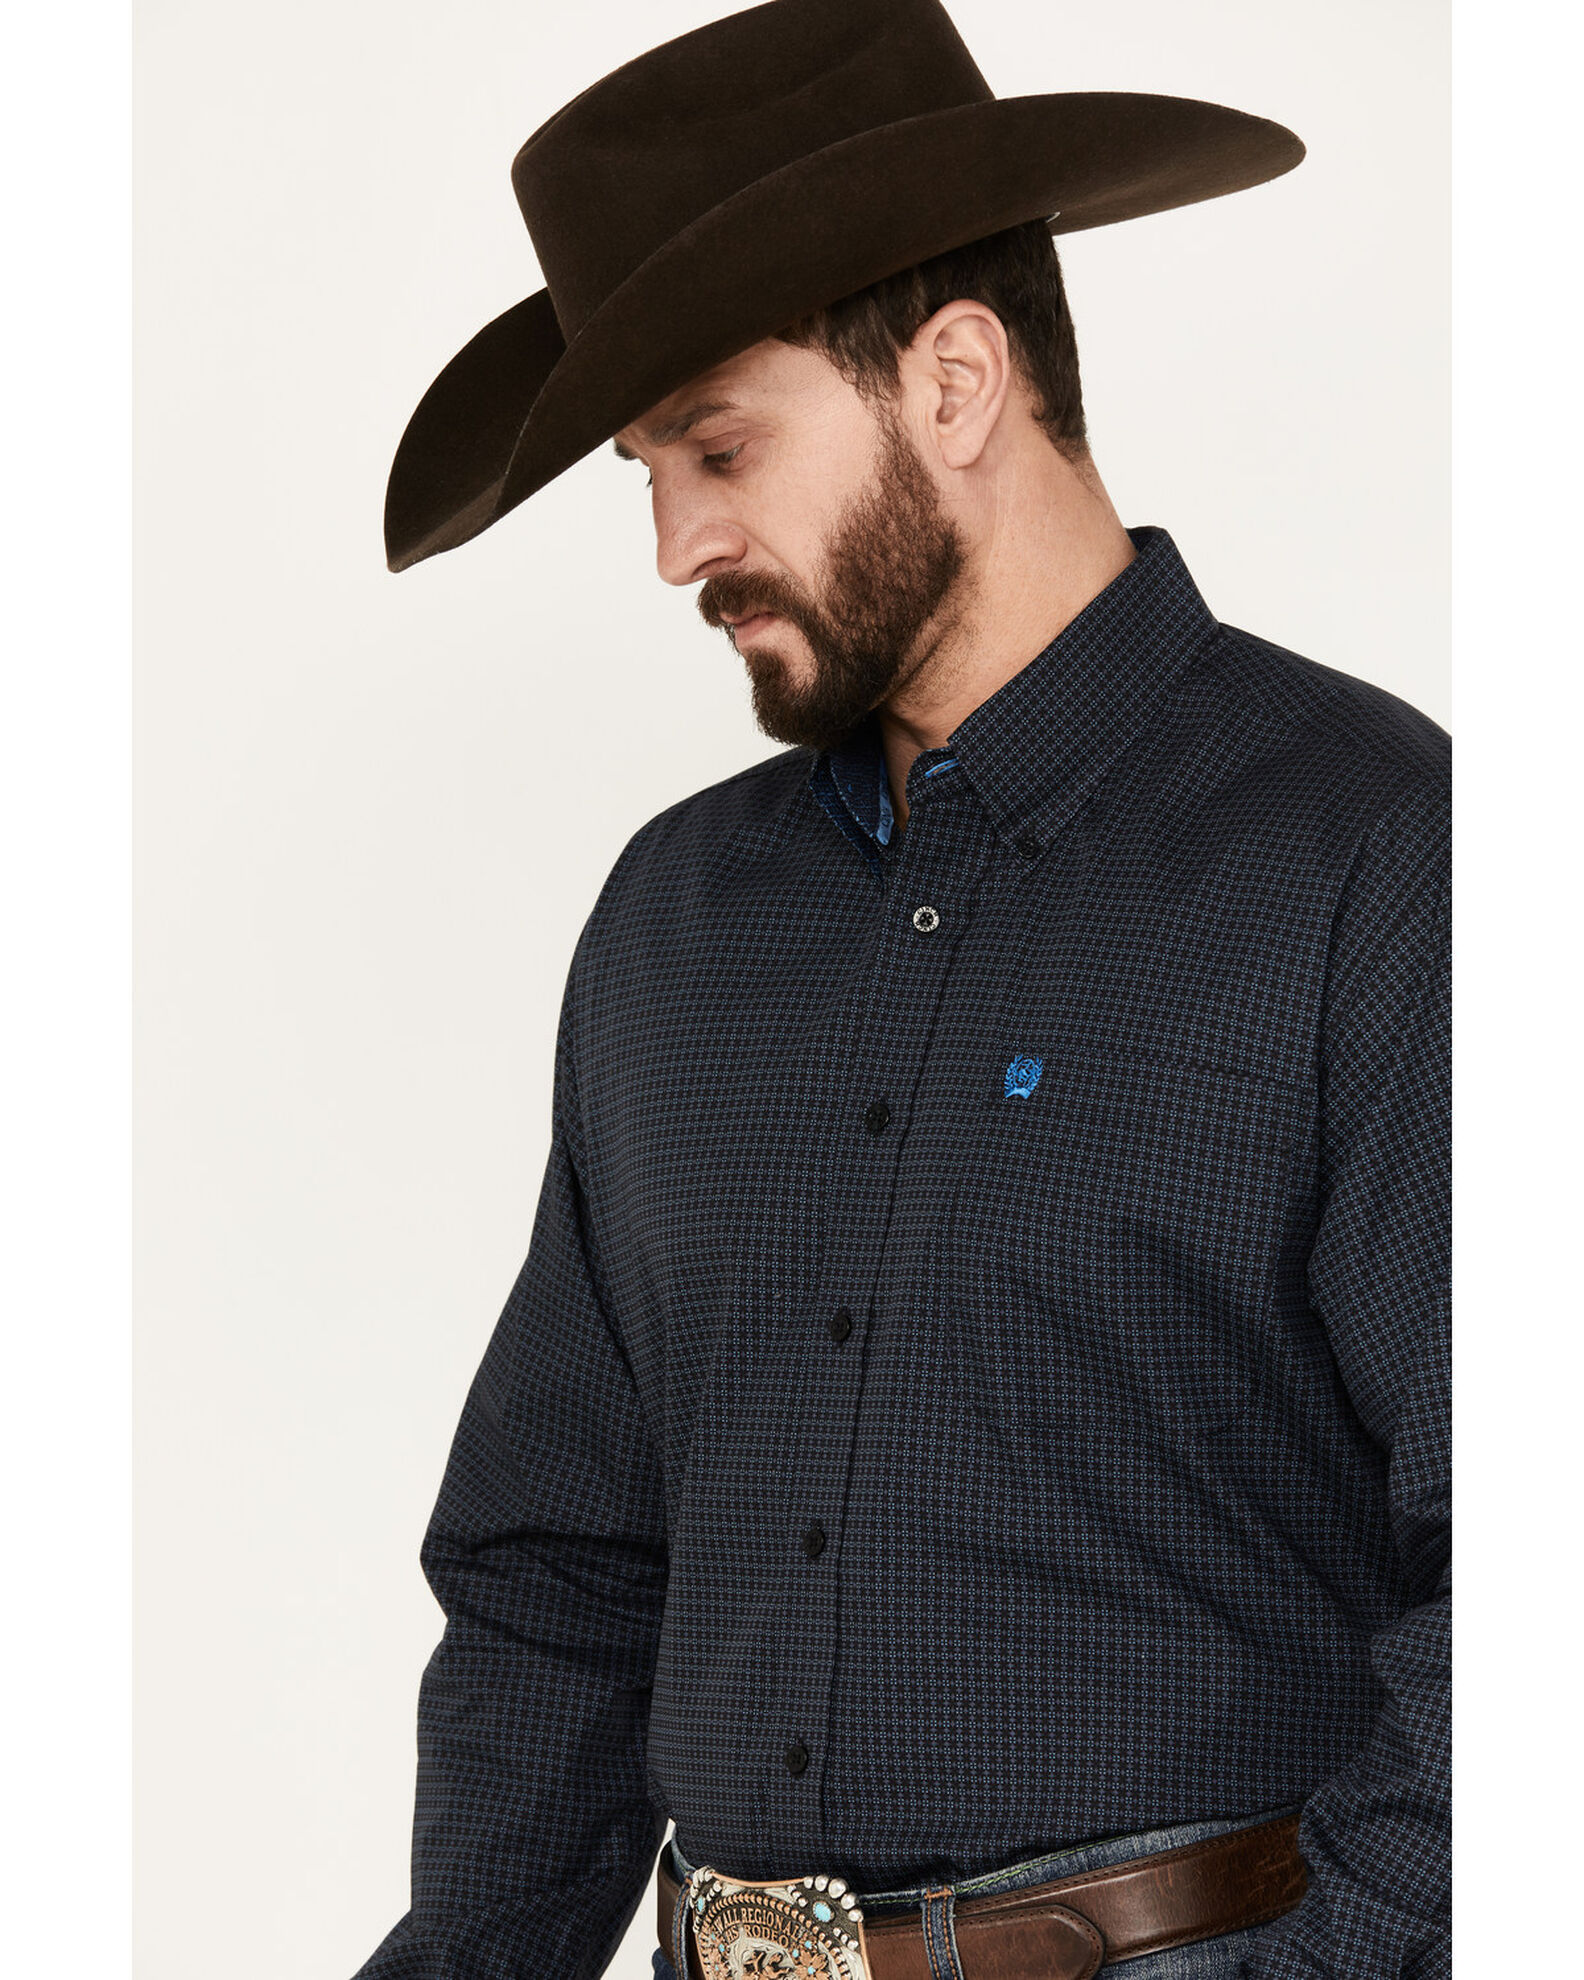 Cinch Men's Geo Print Long Sleeve Button Down Western Shirt